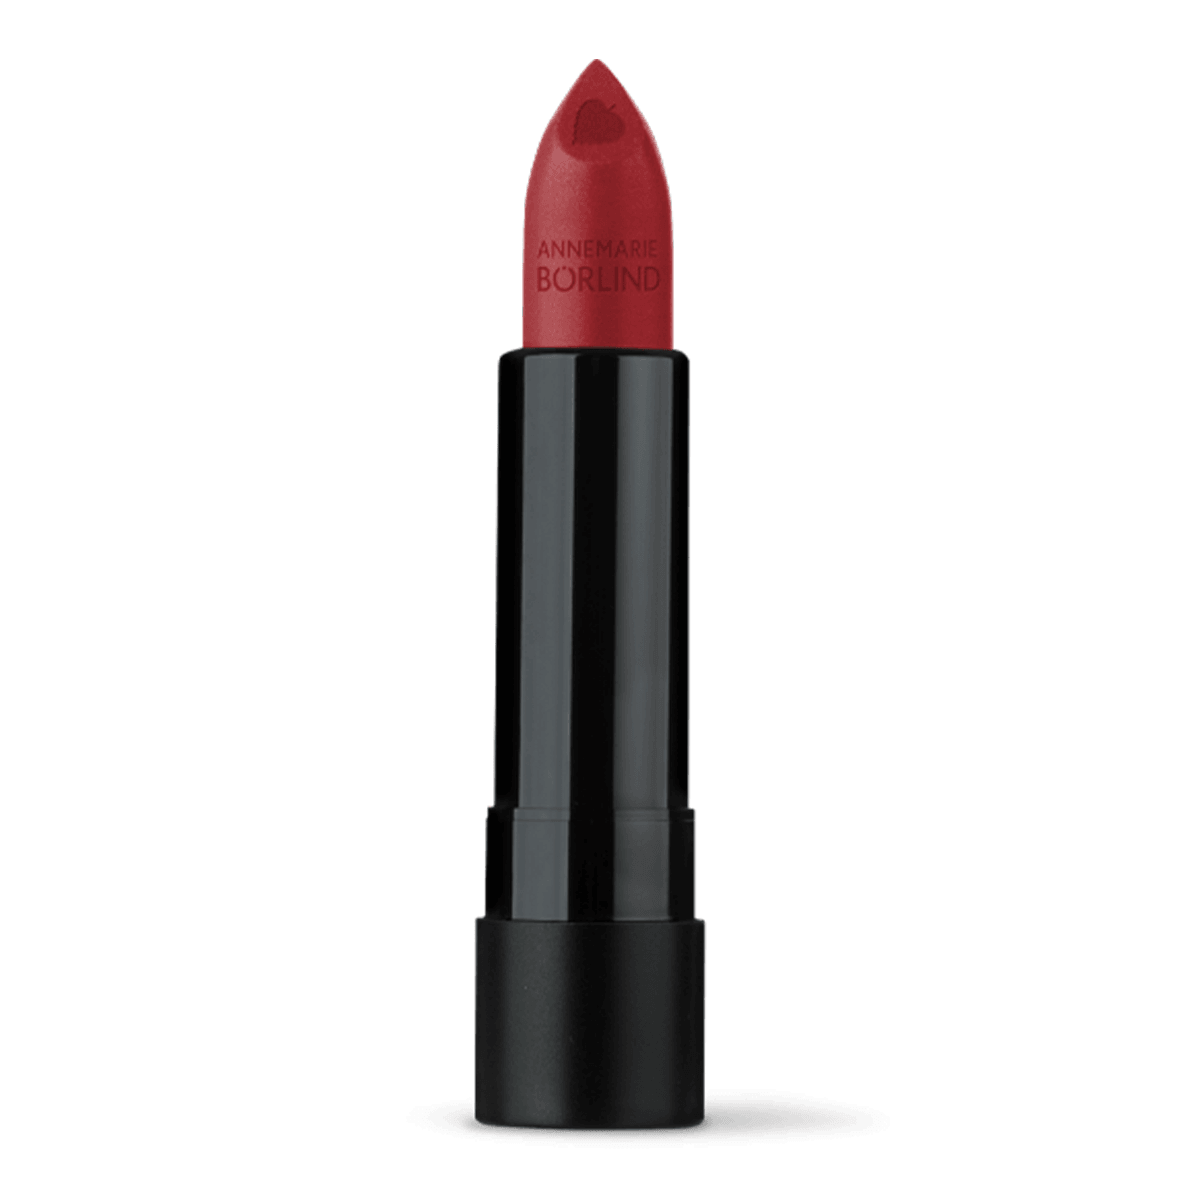 Annemarie Borlind Lipstick Burgundy 4.2g Cosmetics - Lip Makeup at Village Vitamin Store